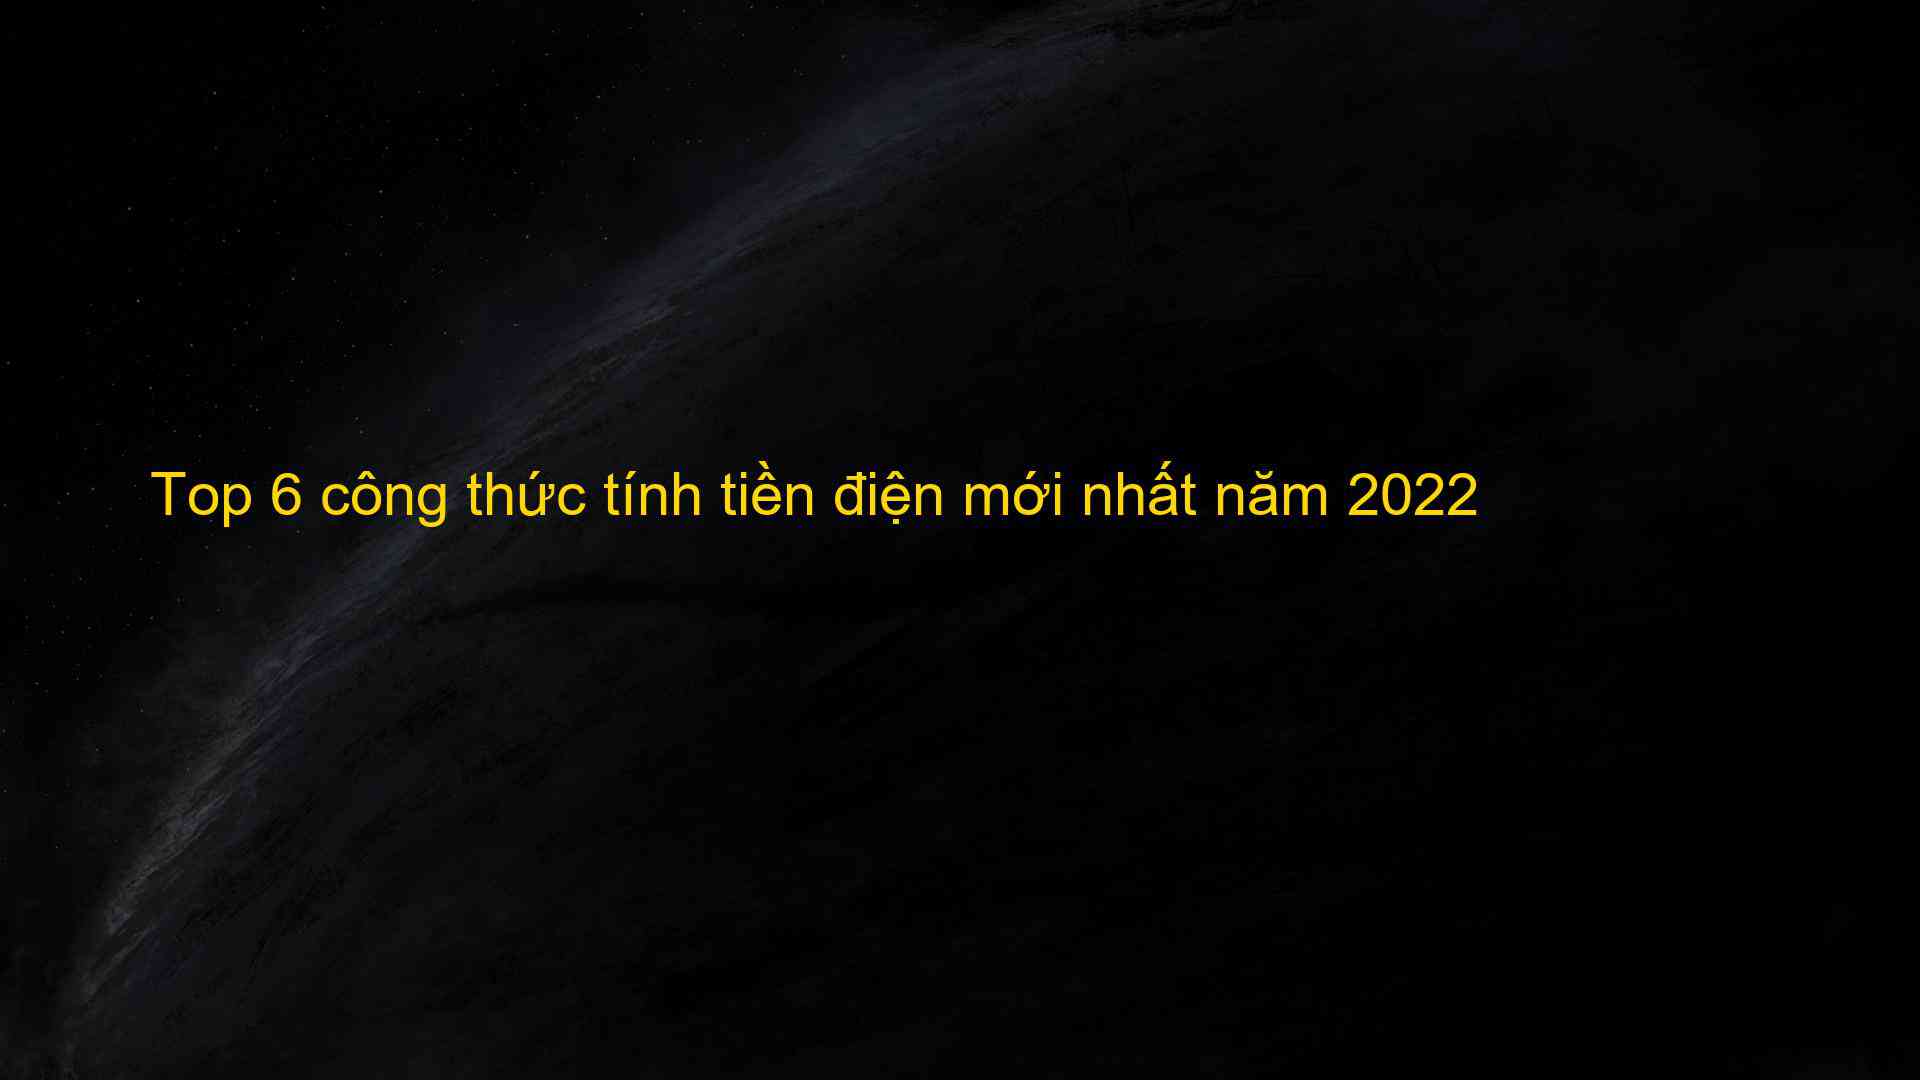 Top 6 cong thuc tinh tien dien moi nhat nam 2022 1659755211